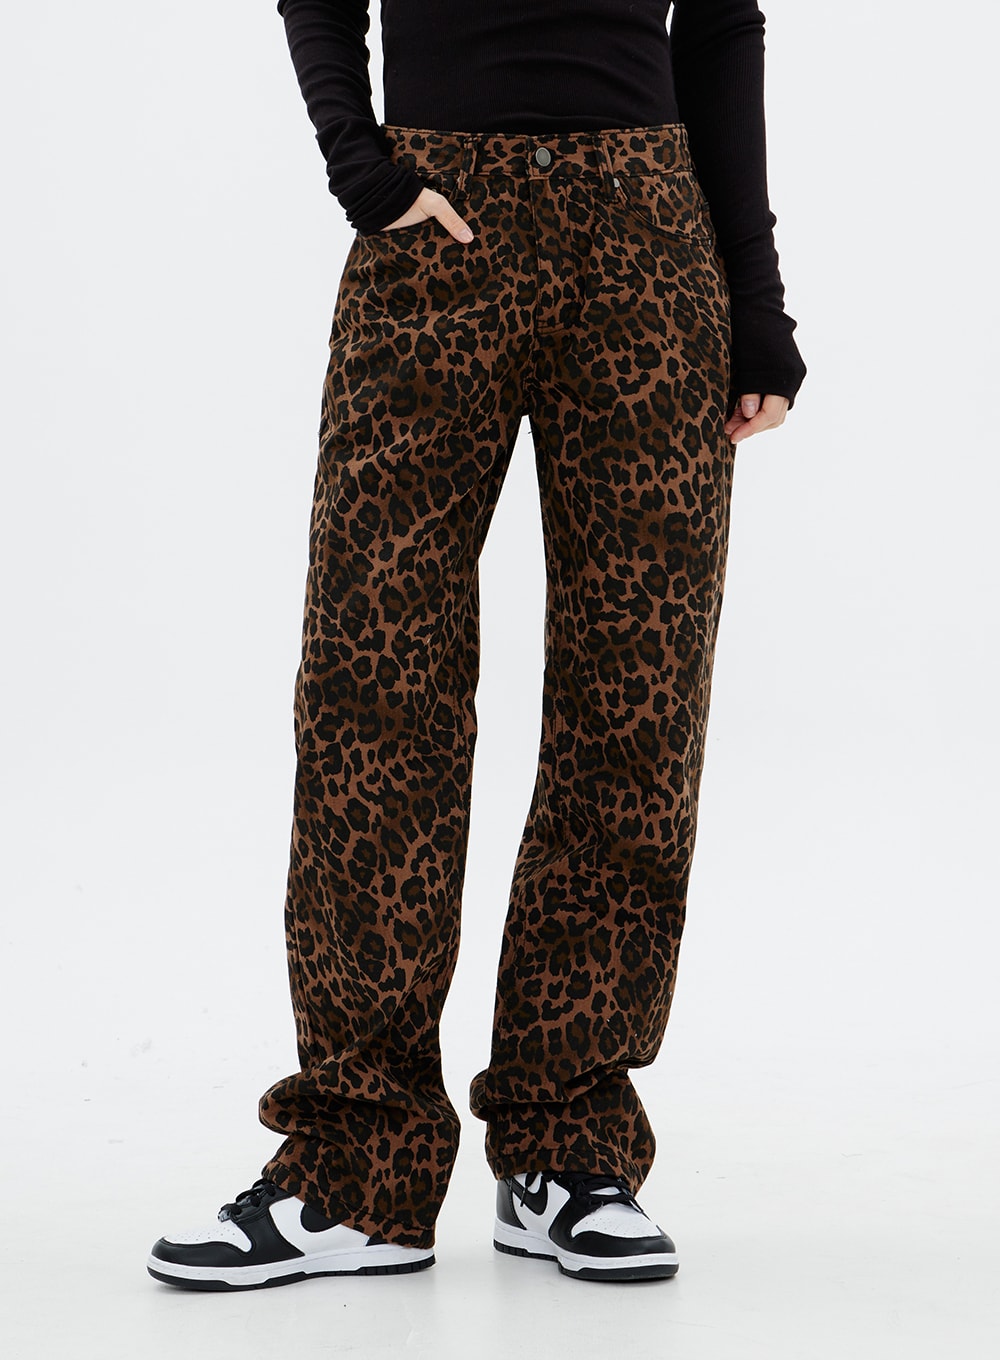 ZhiHiMeRi Women's Trendy Leopard Animal Print Wide Leg Pants,Leopard,(US  4-6) S at Amazon Women's Clothing store